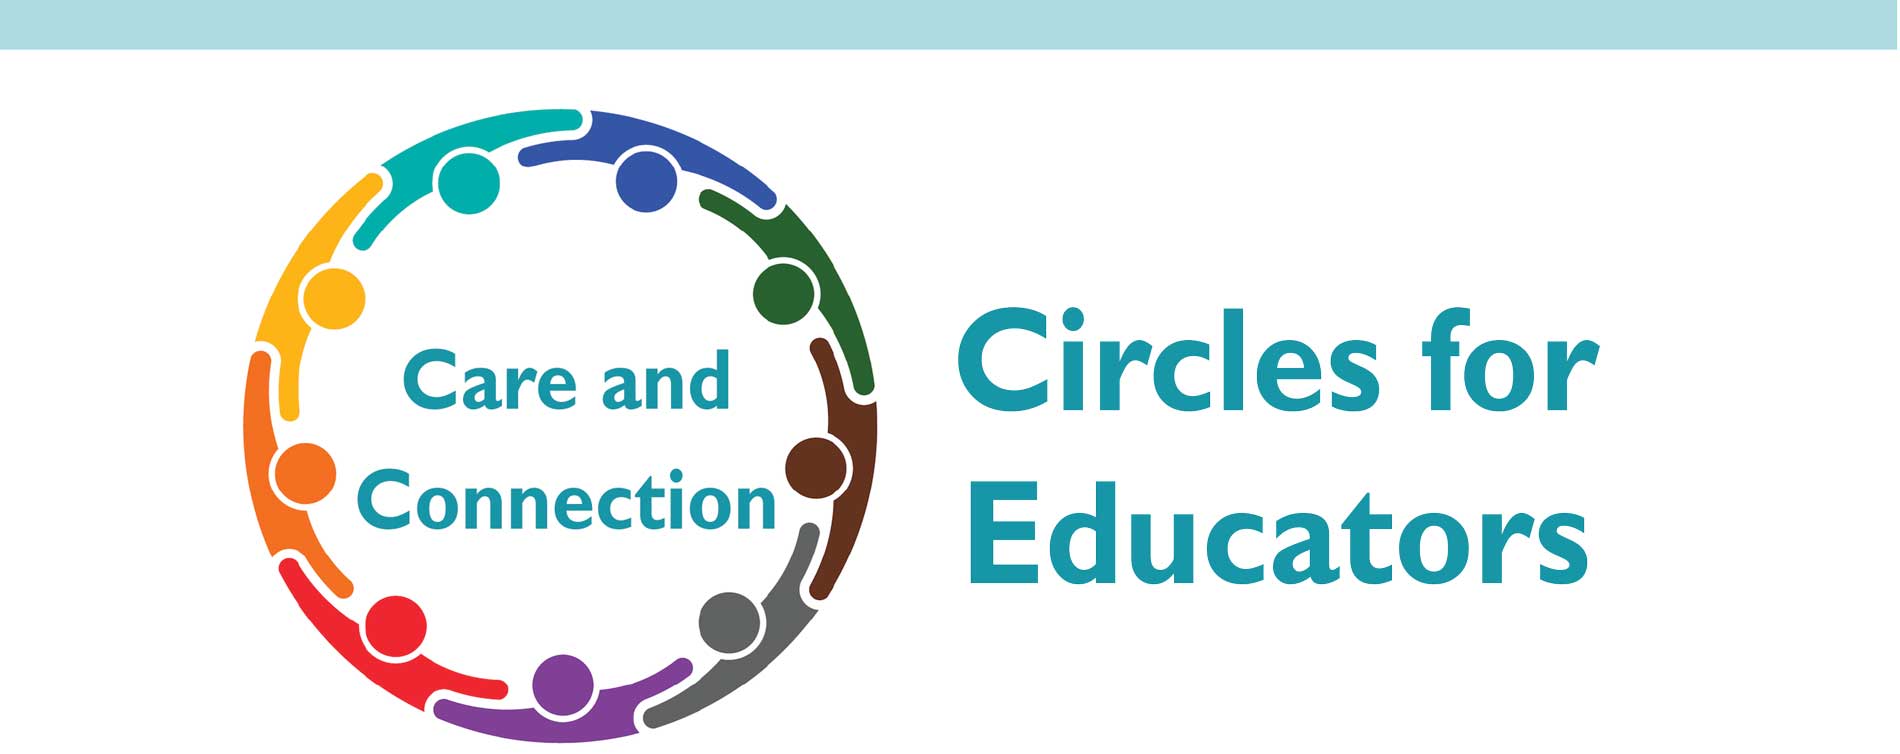 Circles for Educators